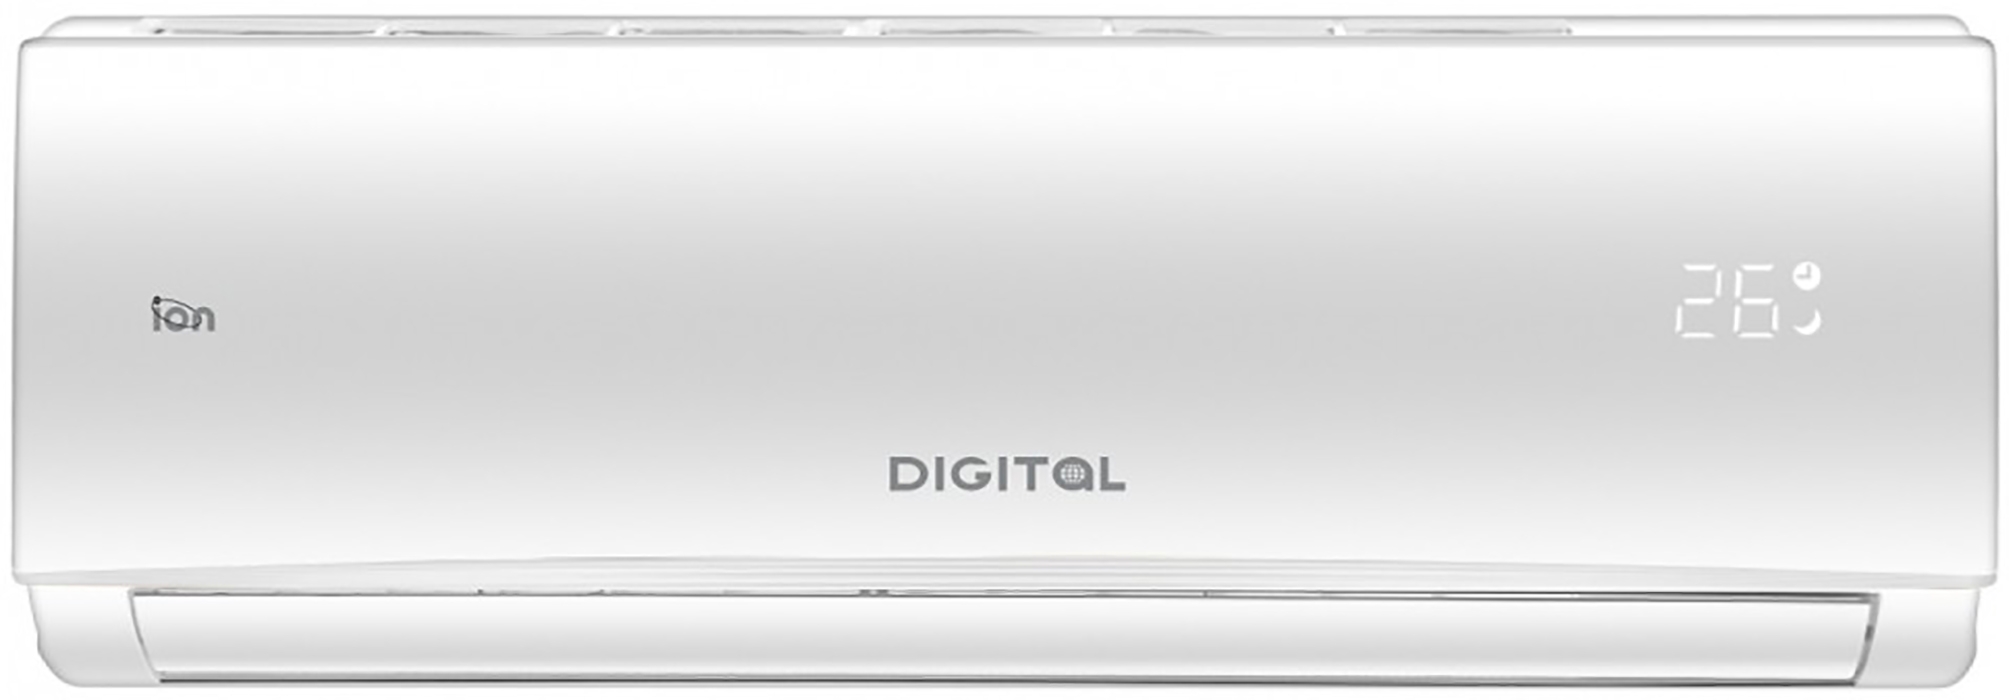 Кондиционер сплит-система Digital DAC-i24SWT (Wi-Fi ready) цена 0 грн - фотография 2